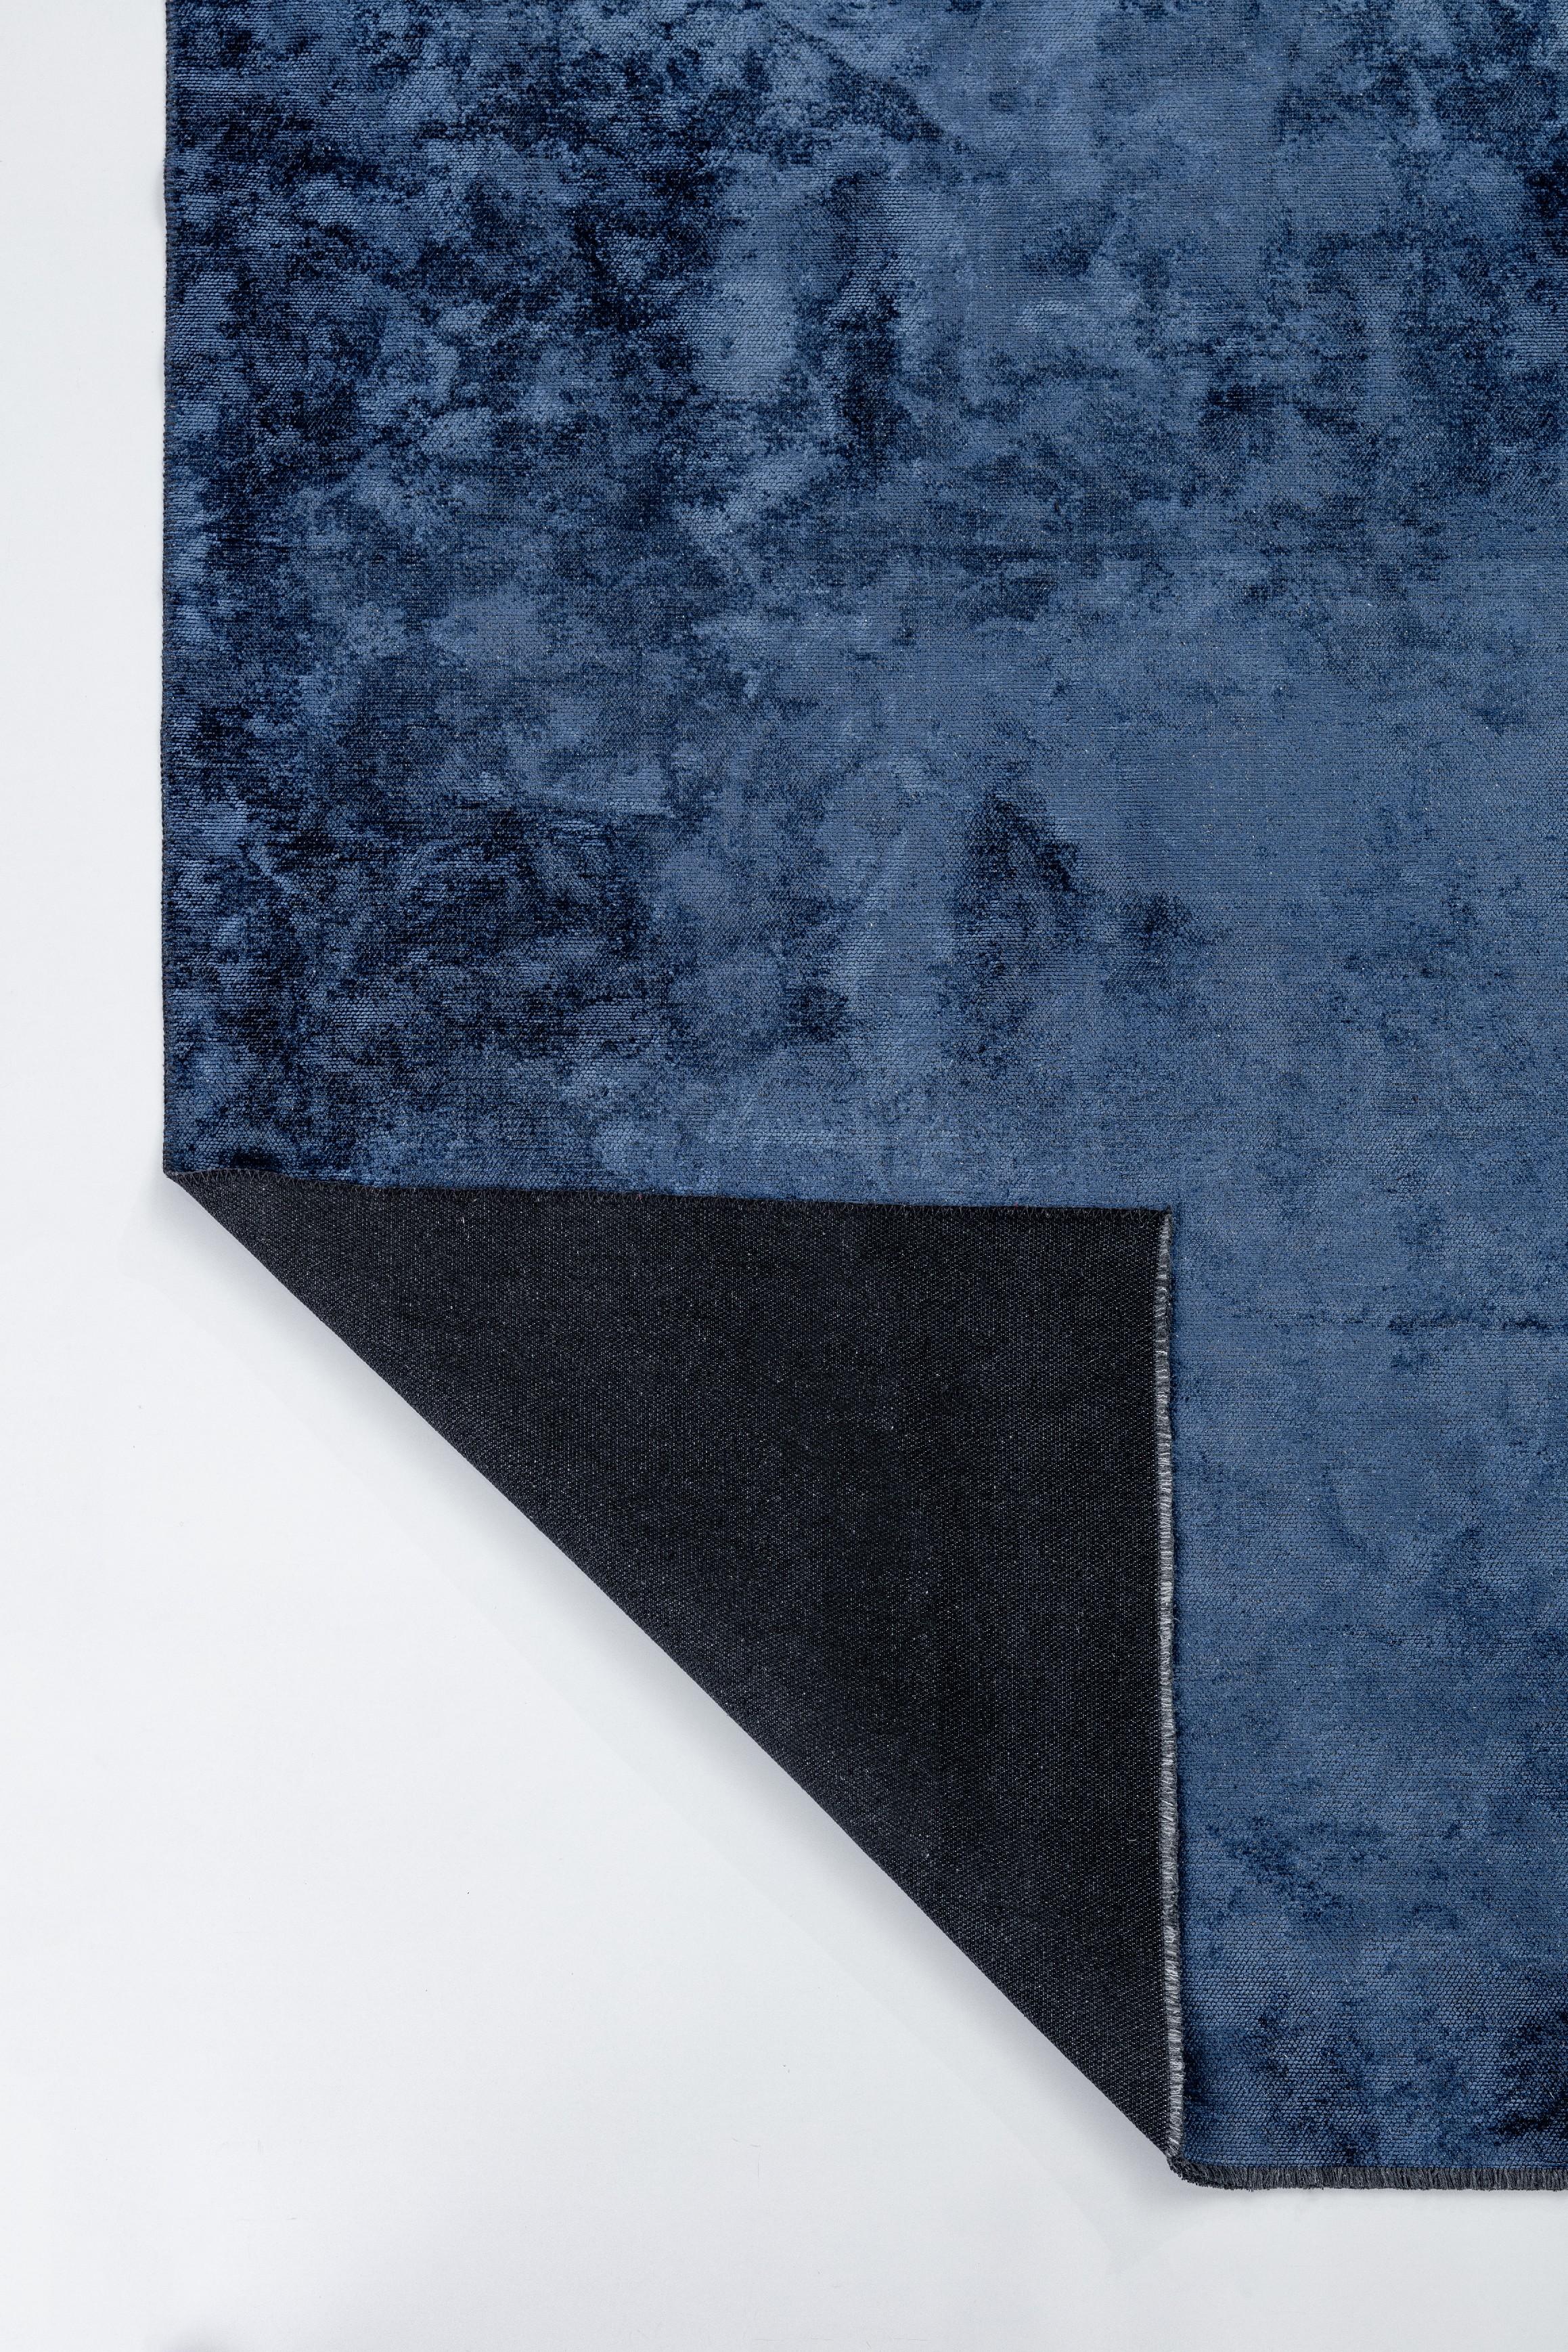 En vente :  (Bleu) Moderne  Tapis de luxe de couleur unie 7